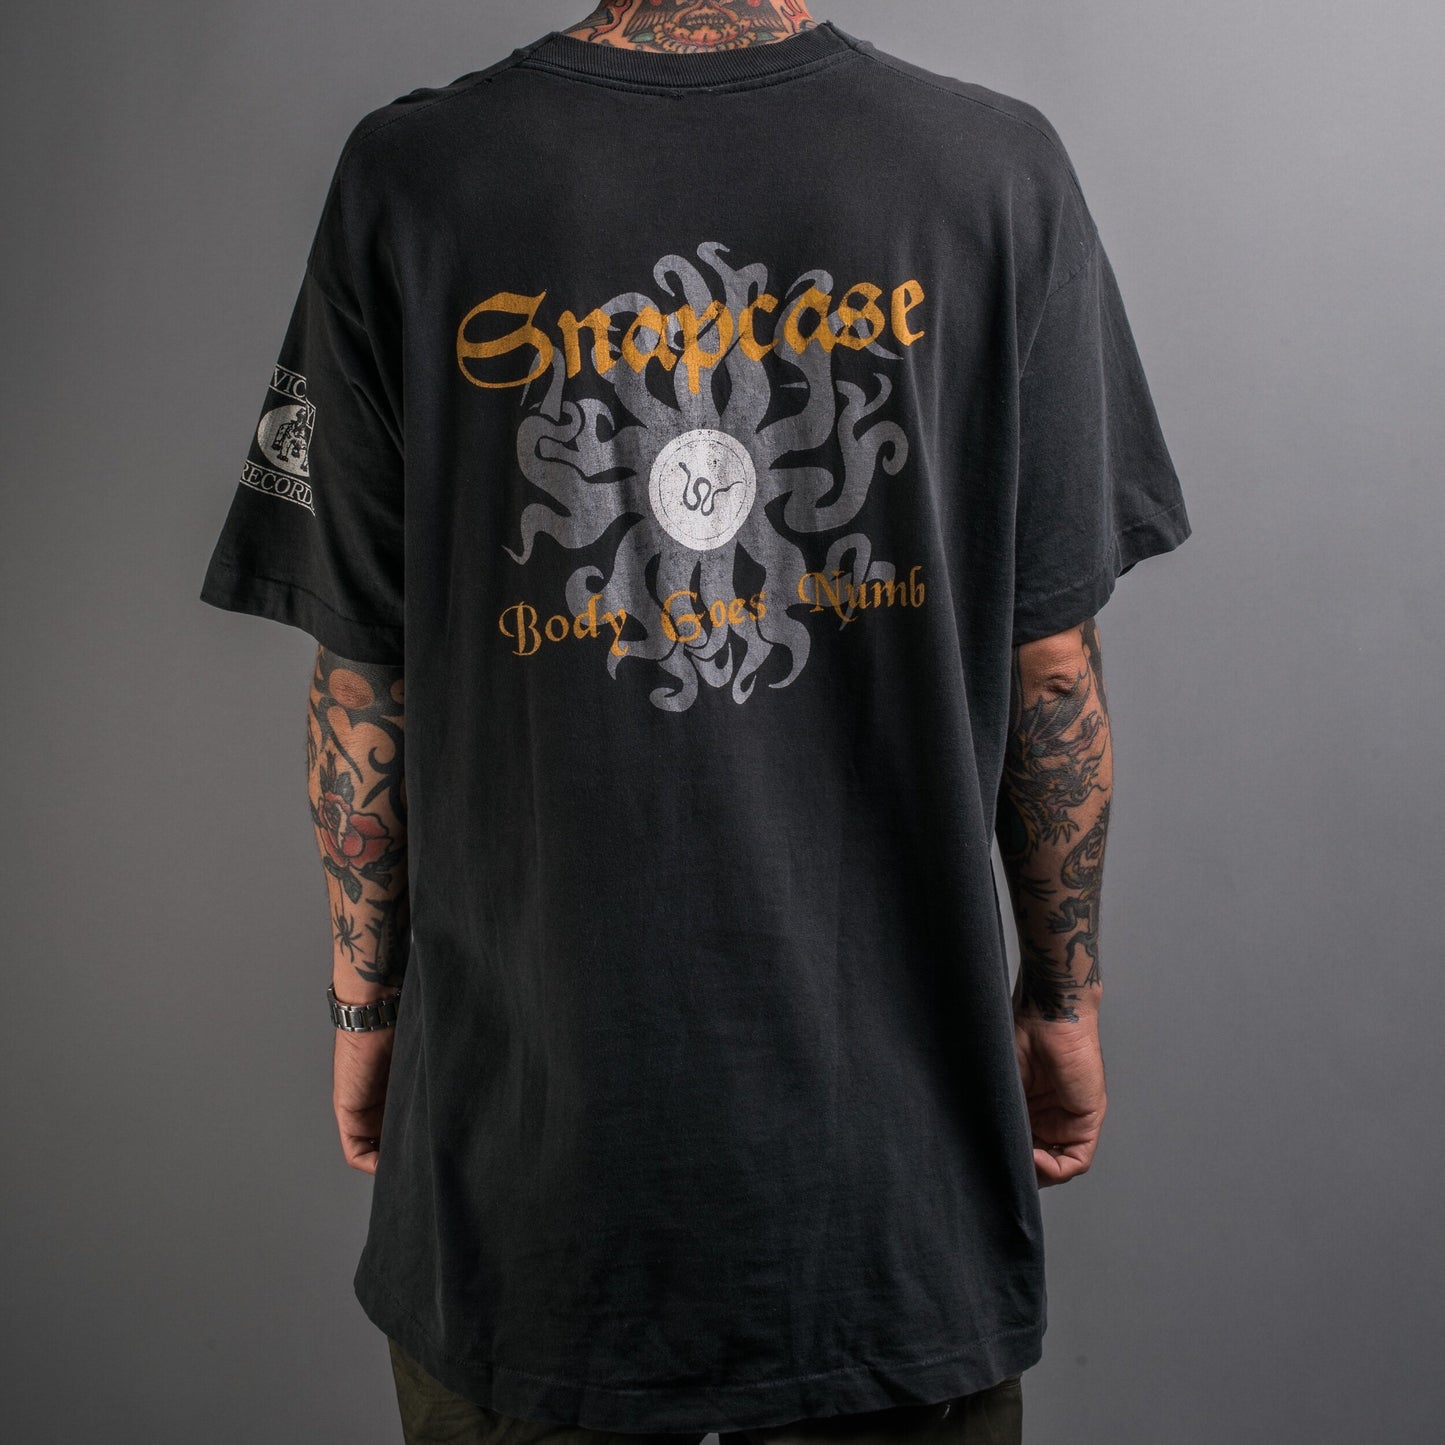 Vintage 90’s Snapcase Body Goes Numb T-Shirt